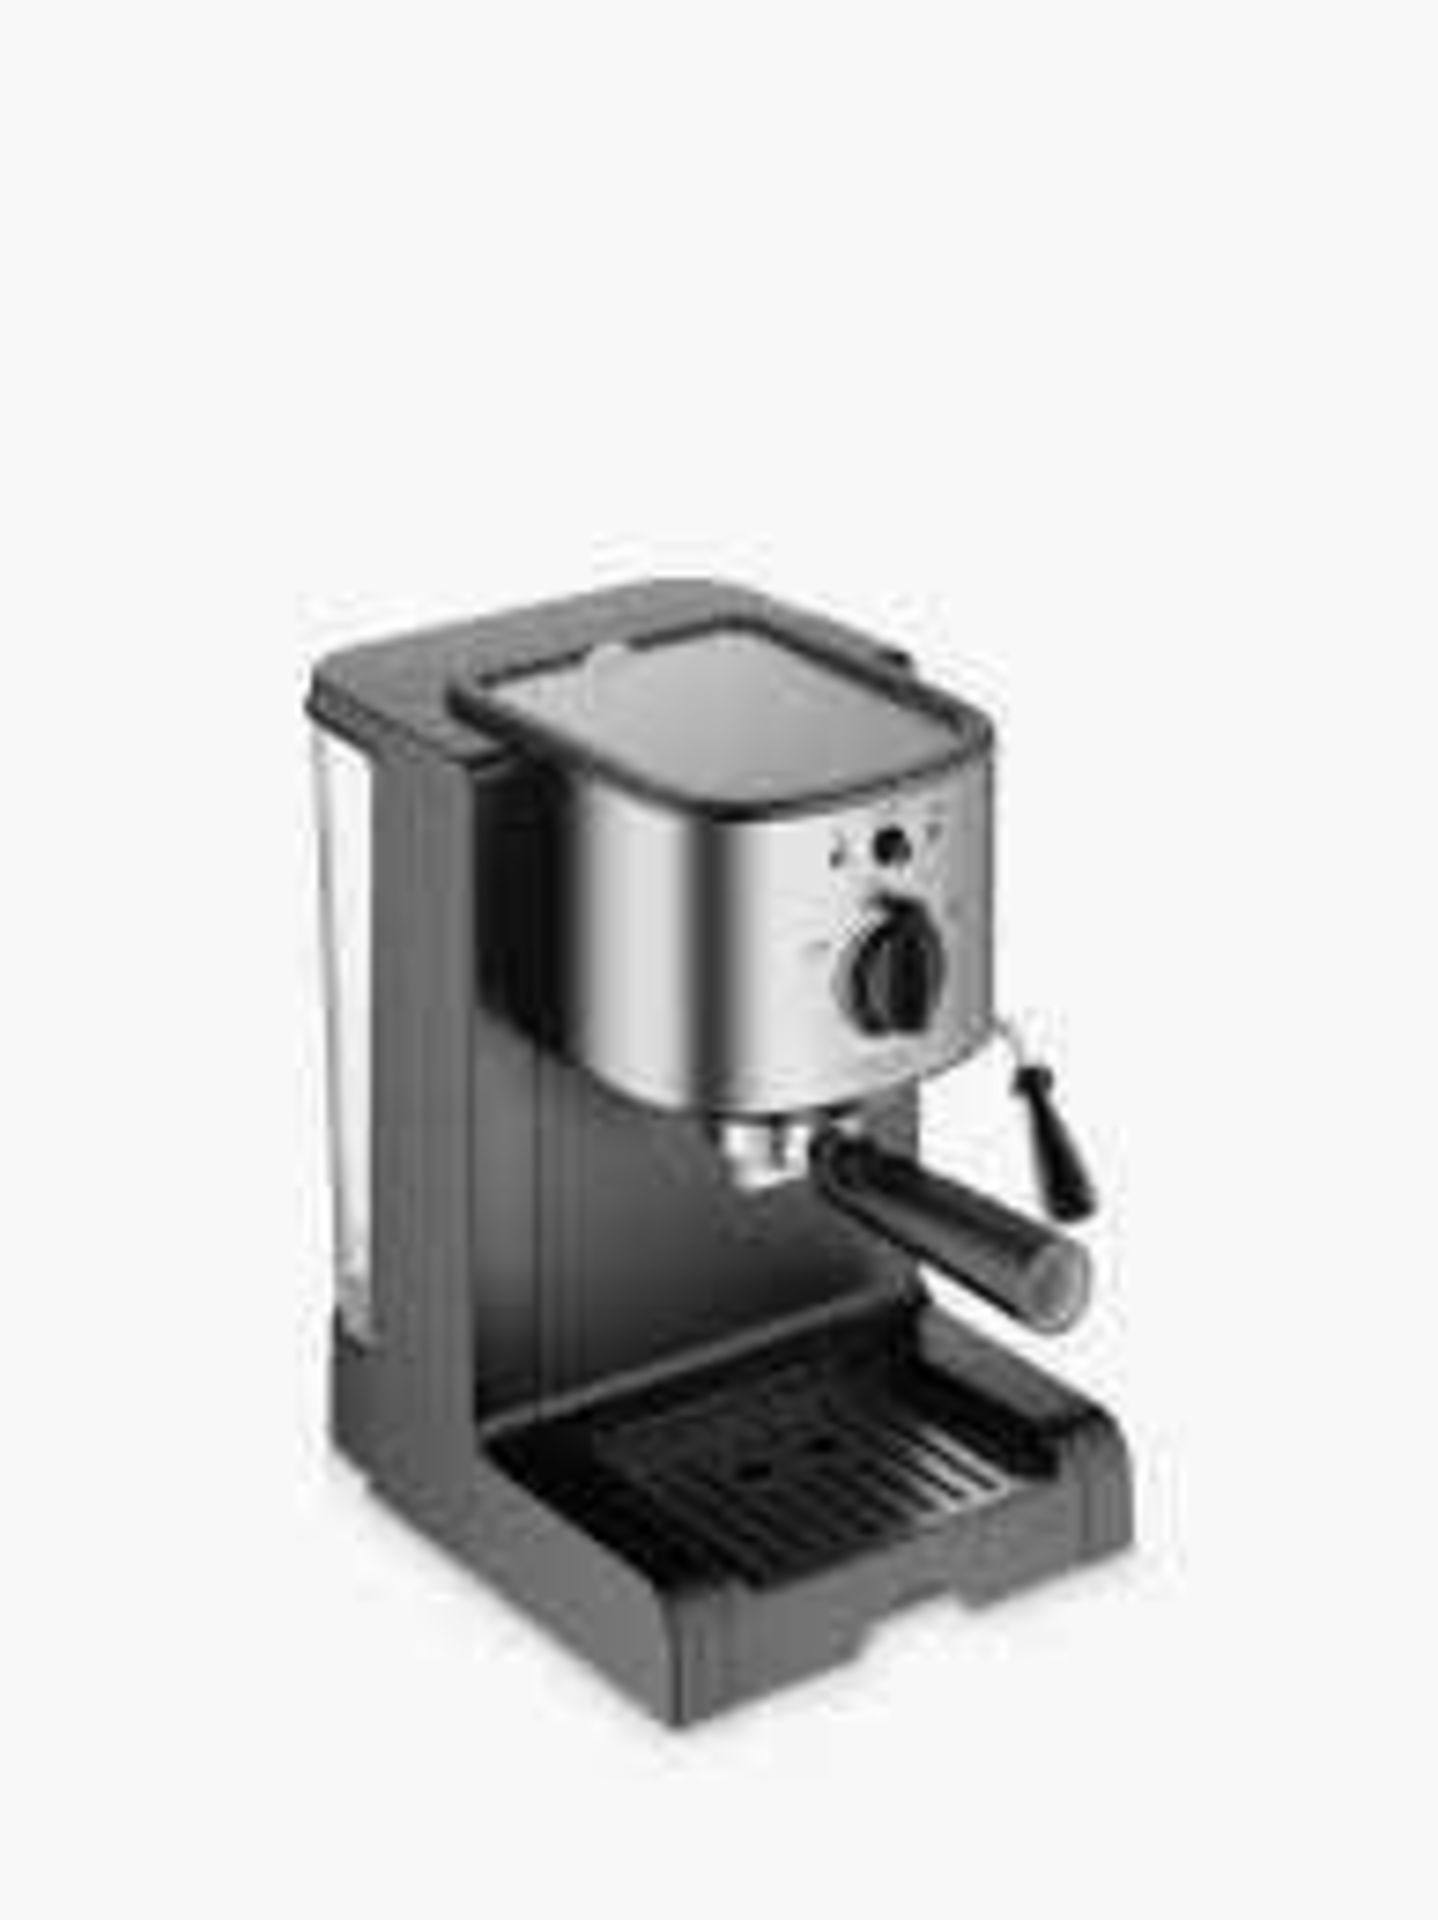 RRP £80 Unboxed Pump Espresso Coffee Machine